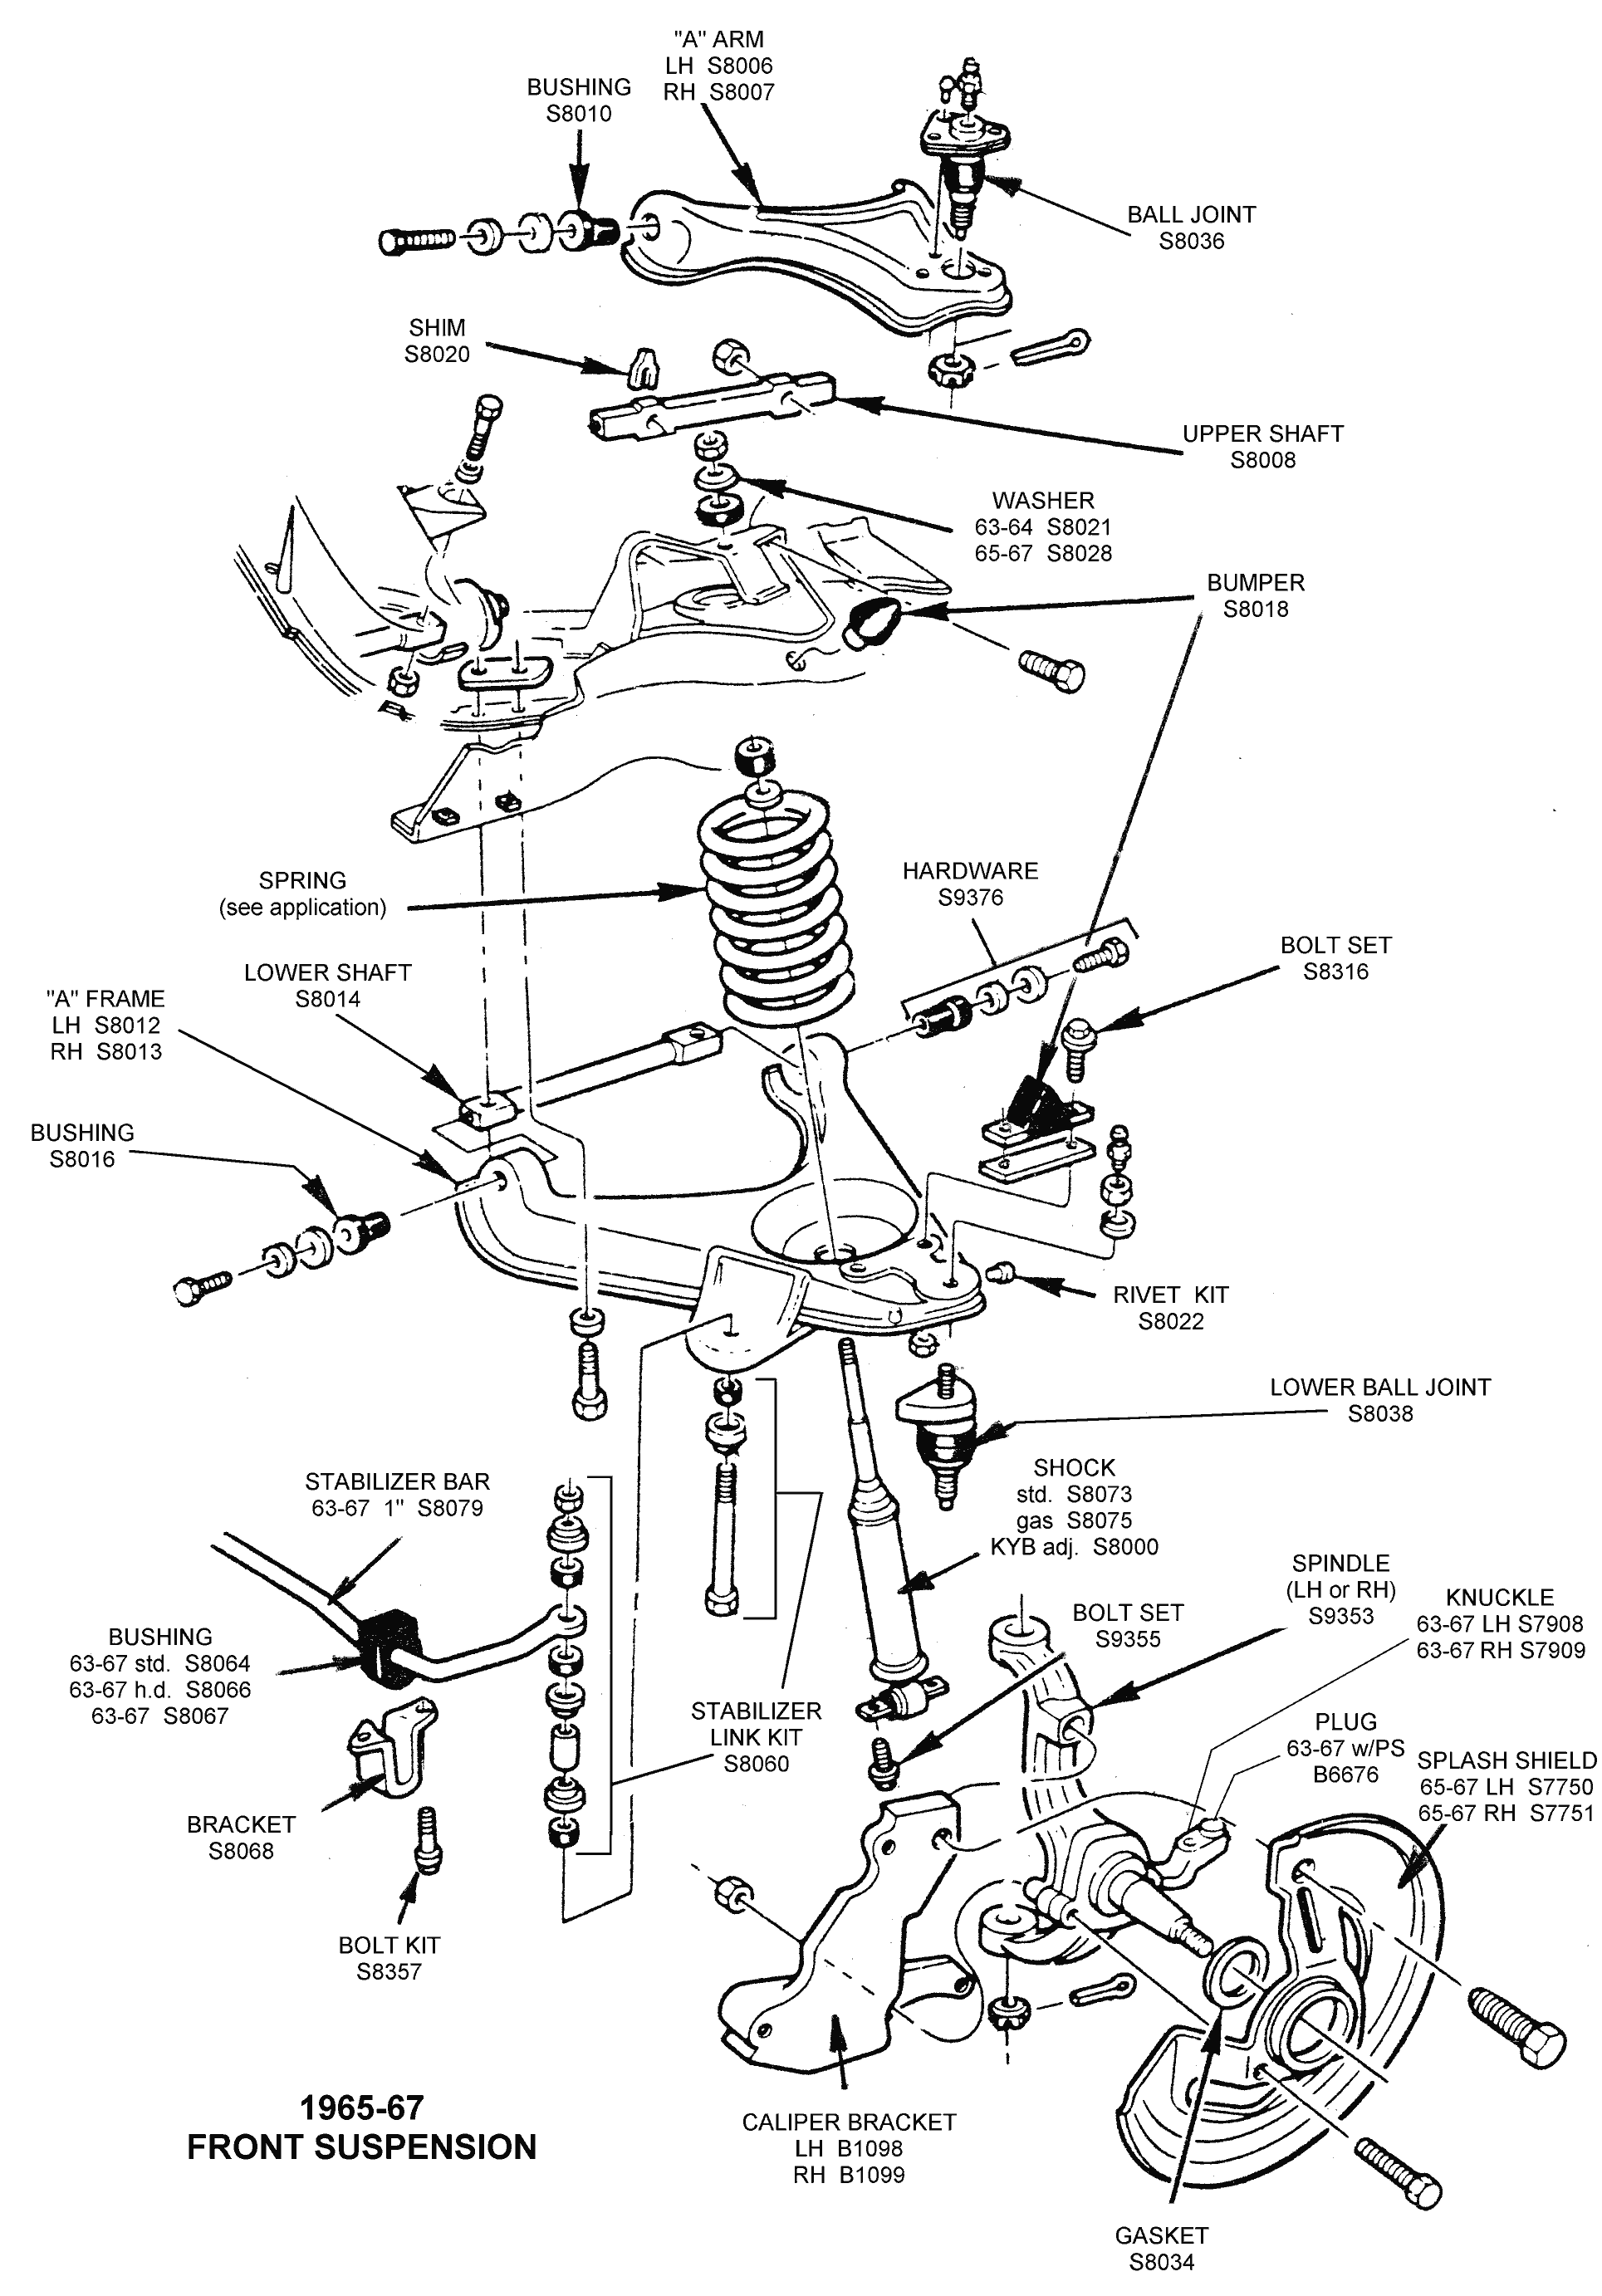 1965-67 Front Suspension - Diagram View